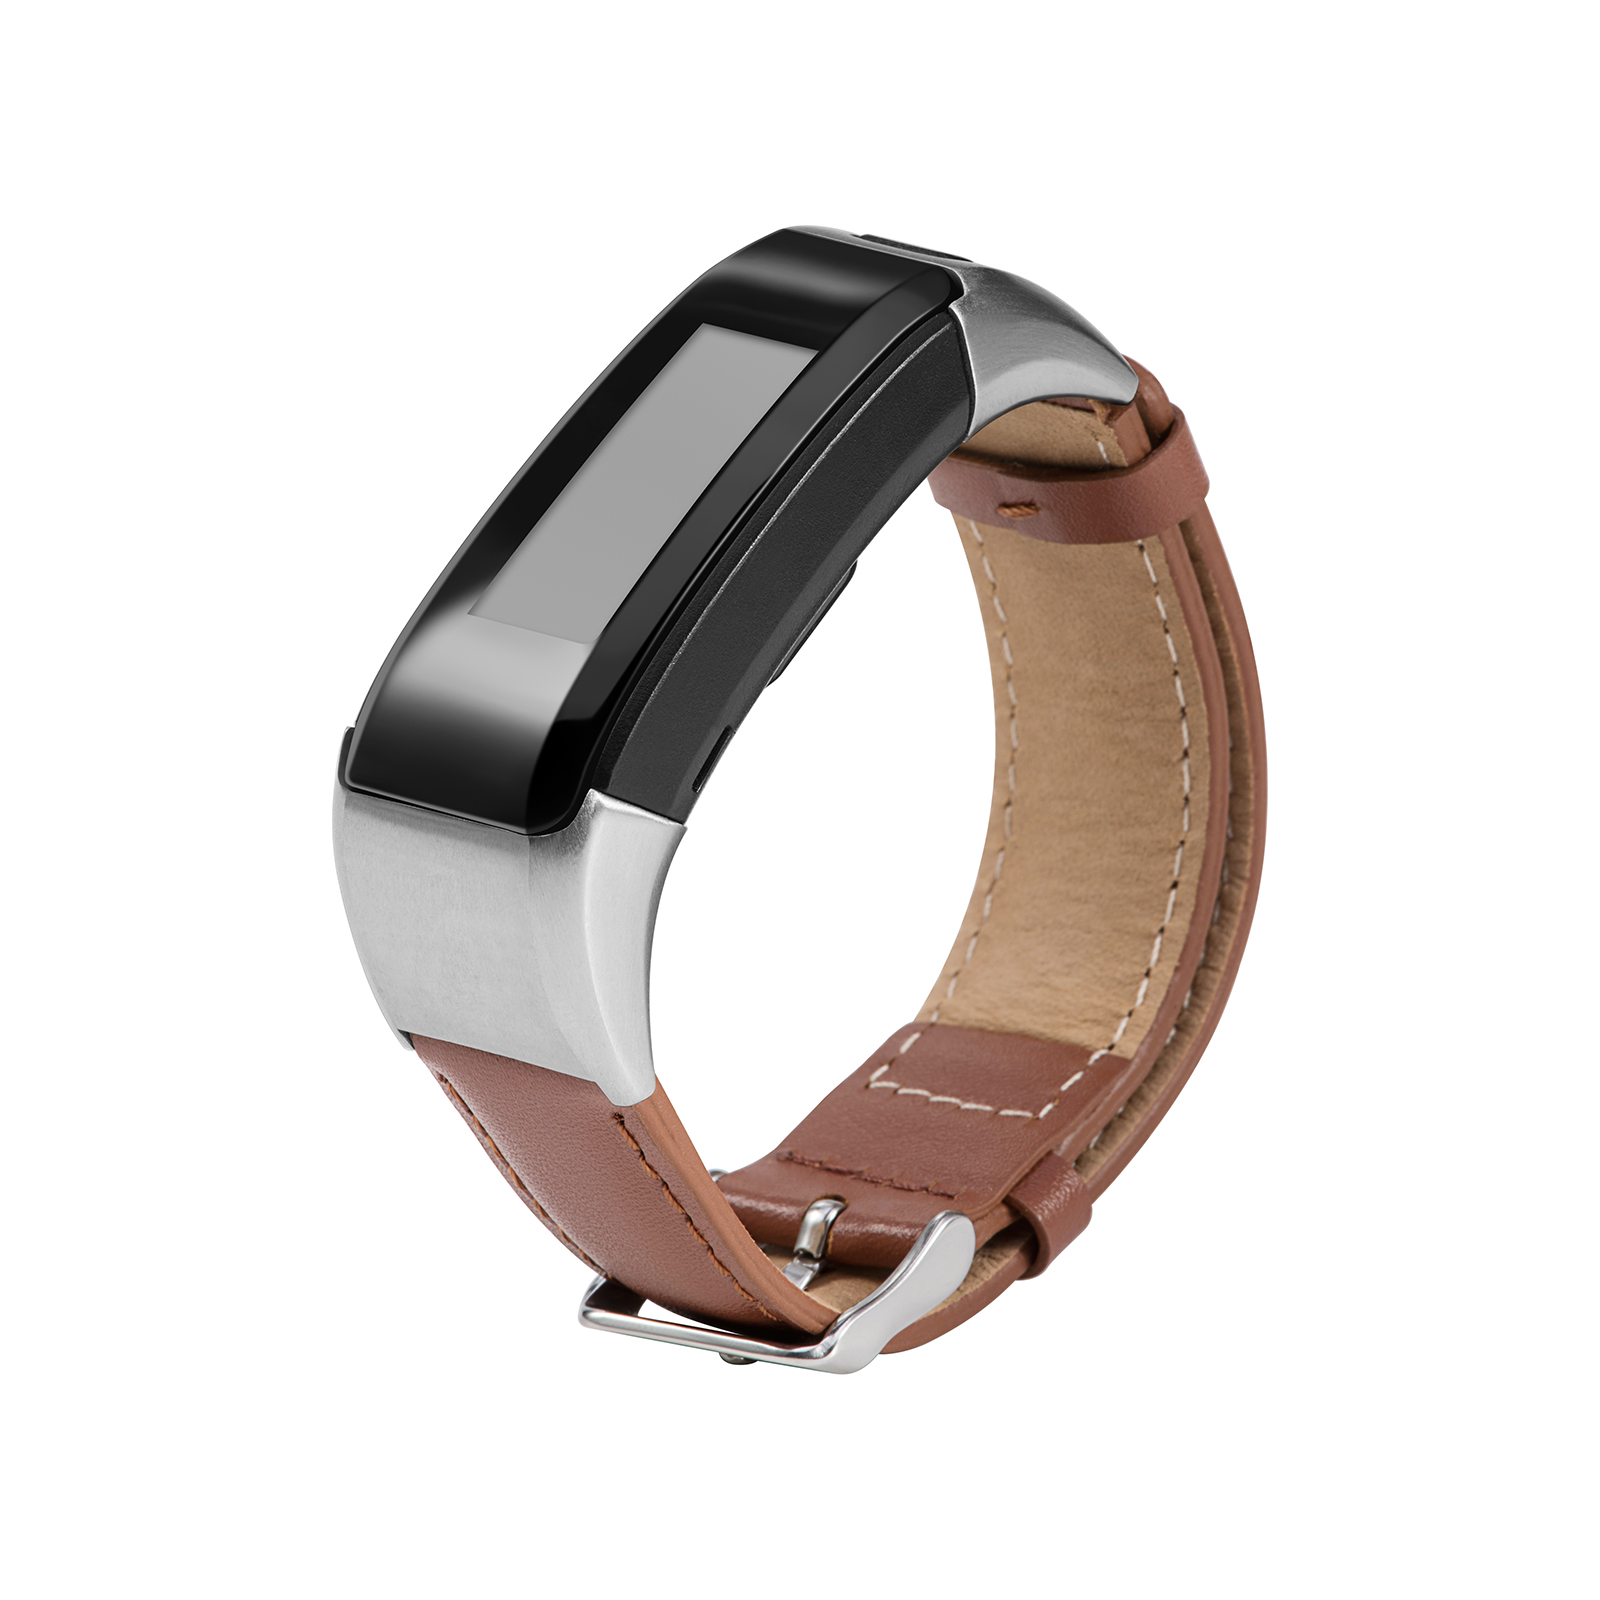 Bakeey-Retro-Metal-Buckle-Leather-Strap-Smart-Watch-Band-For-Garmin-Vivosmart-HR-1739351-12